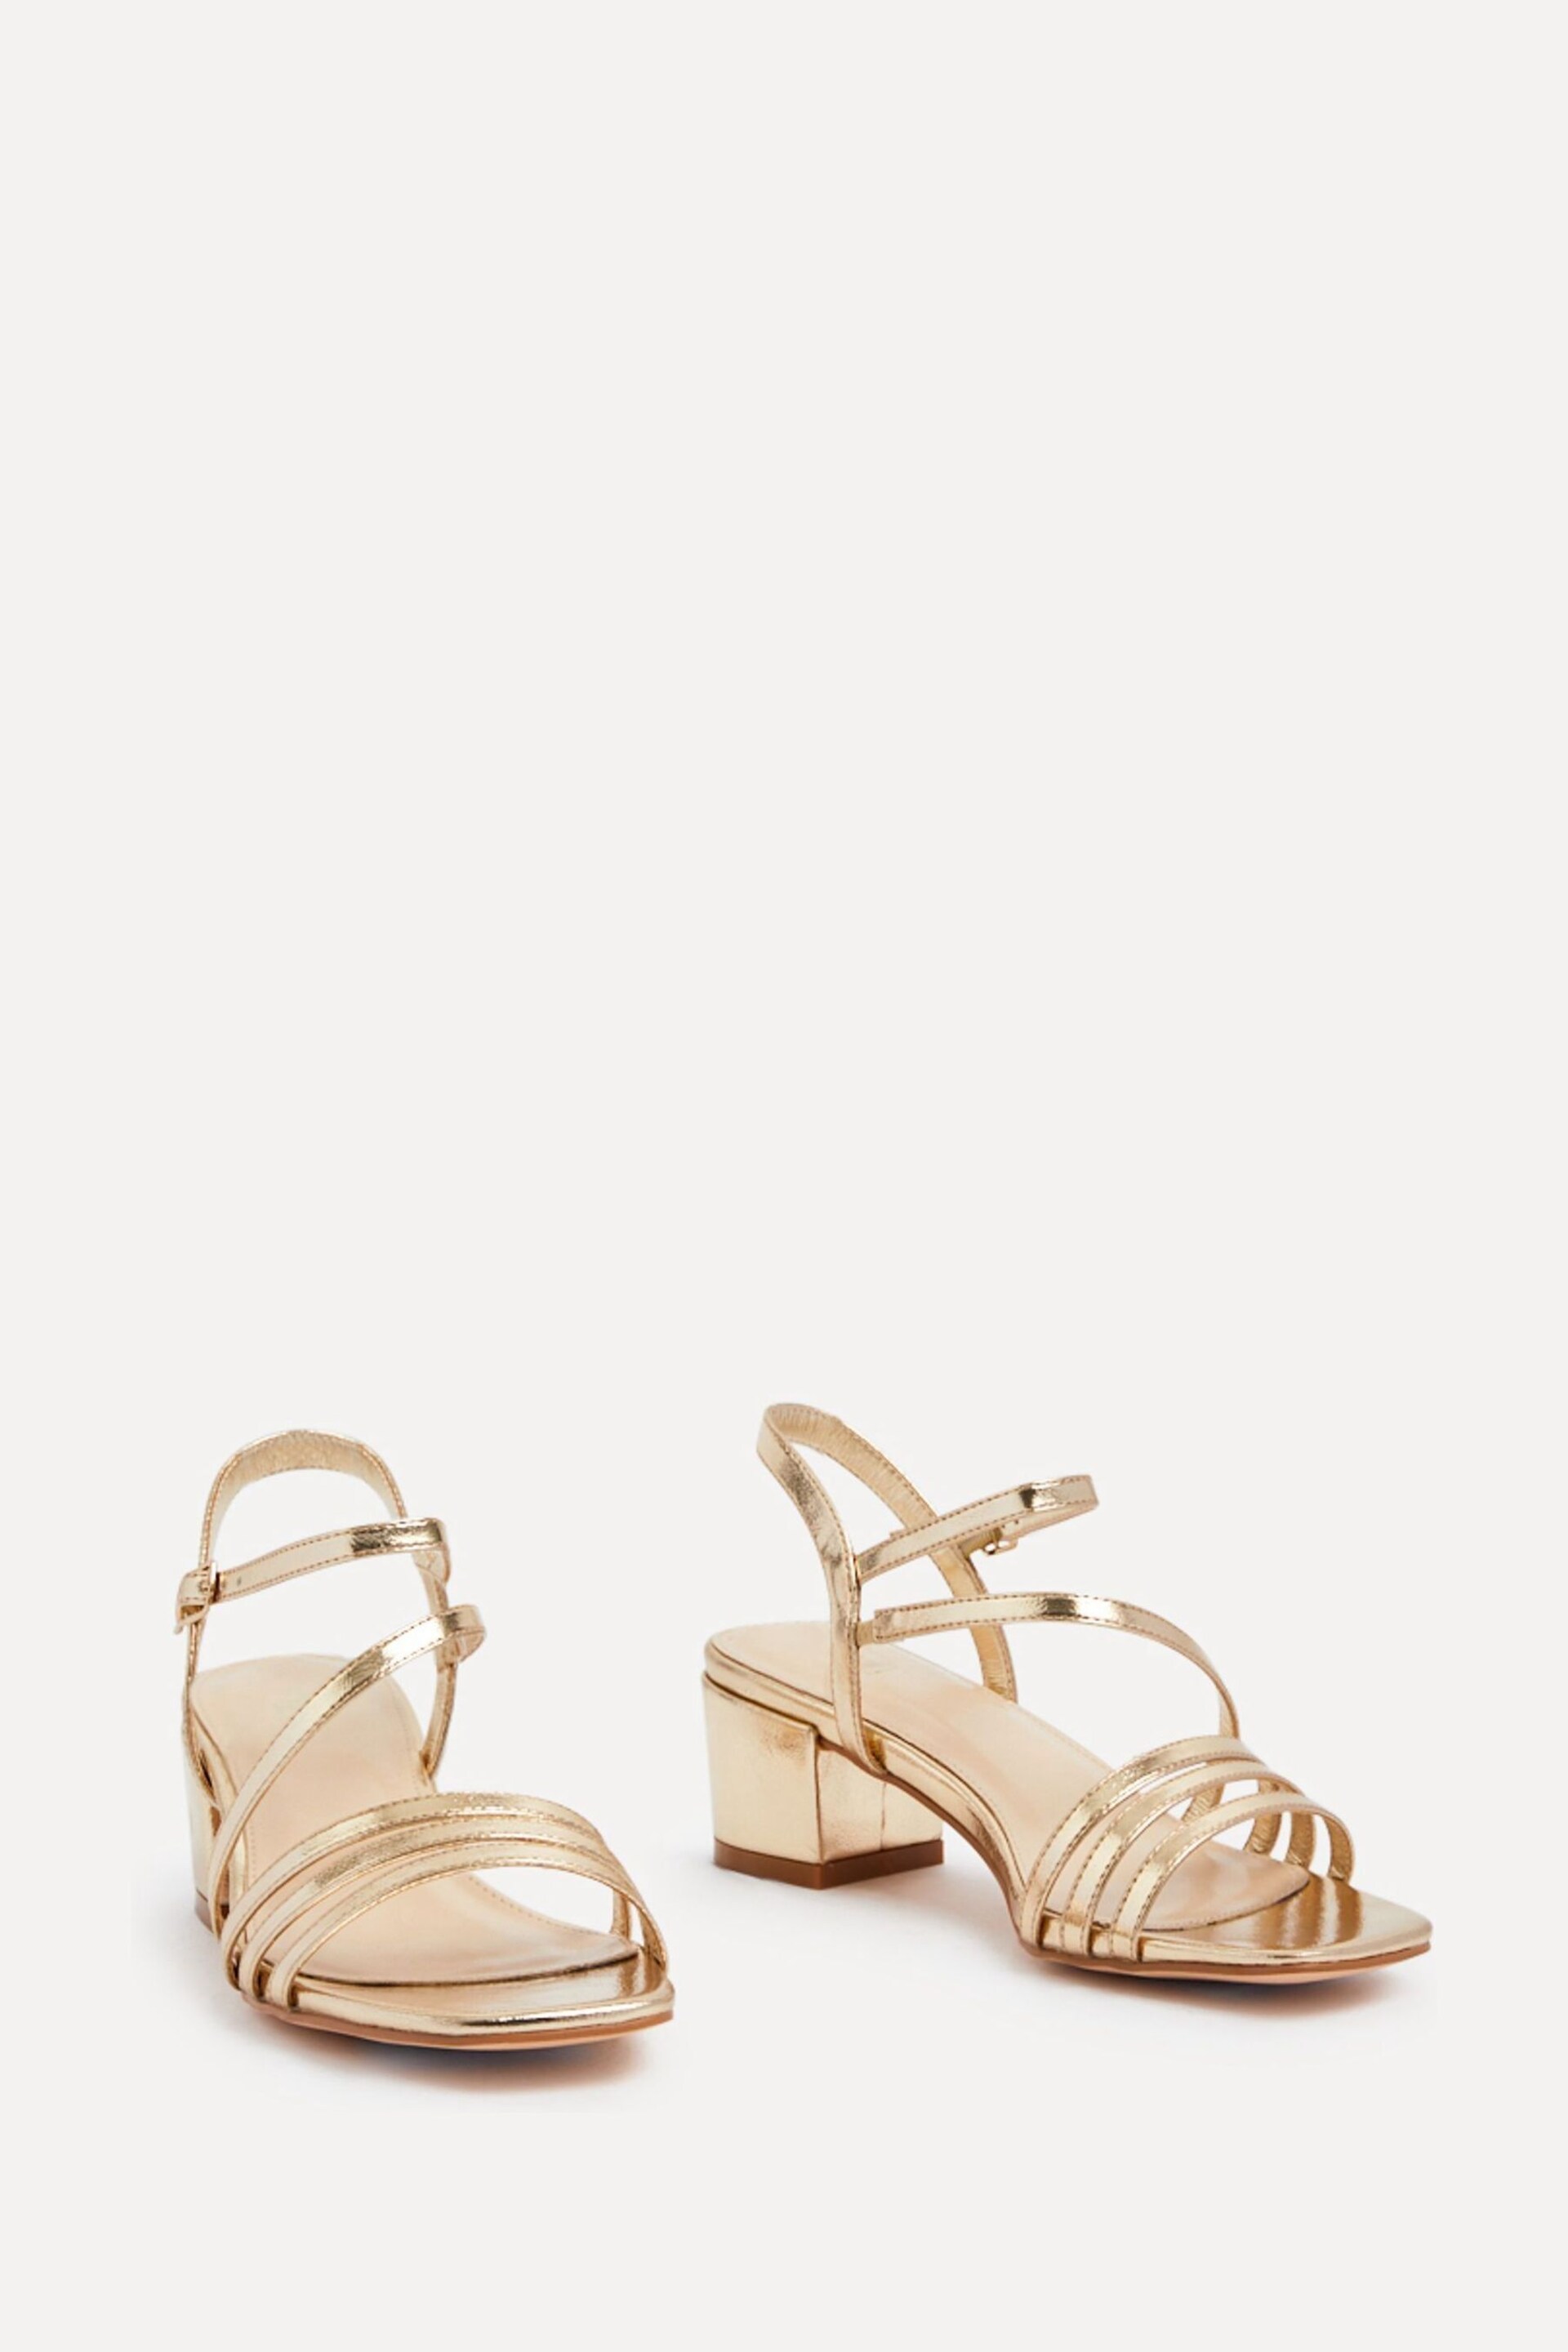 Linzi Gold Afia Strappy Block Heel Sandals - Image 3 of 5